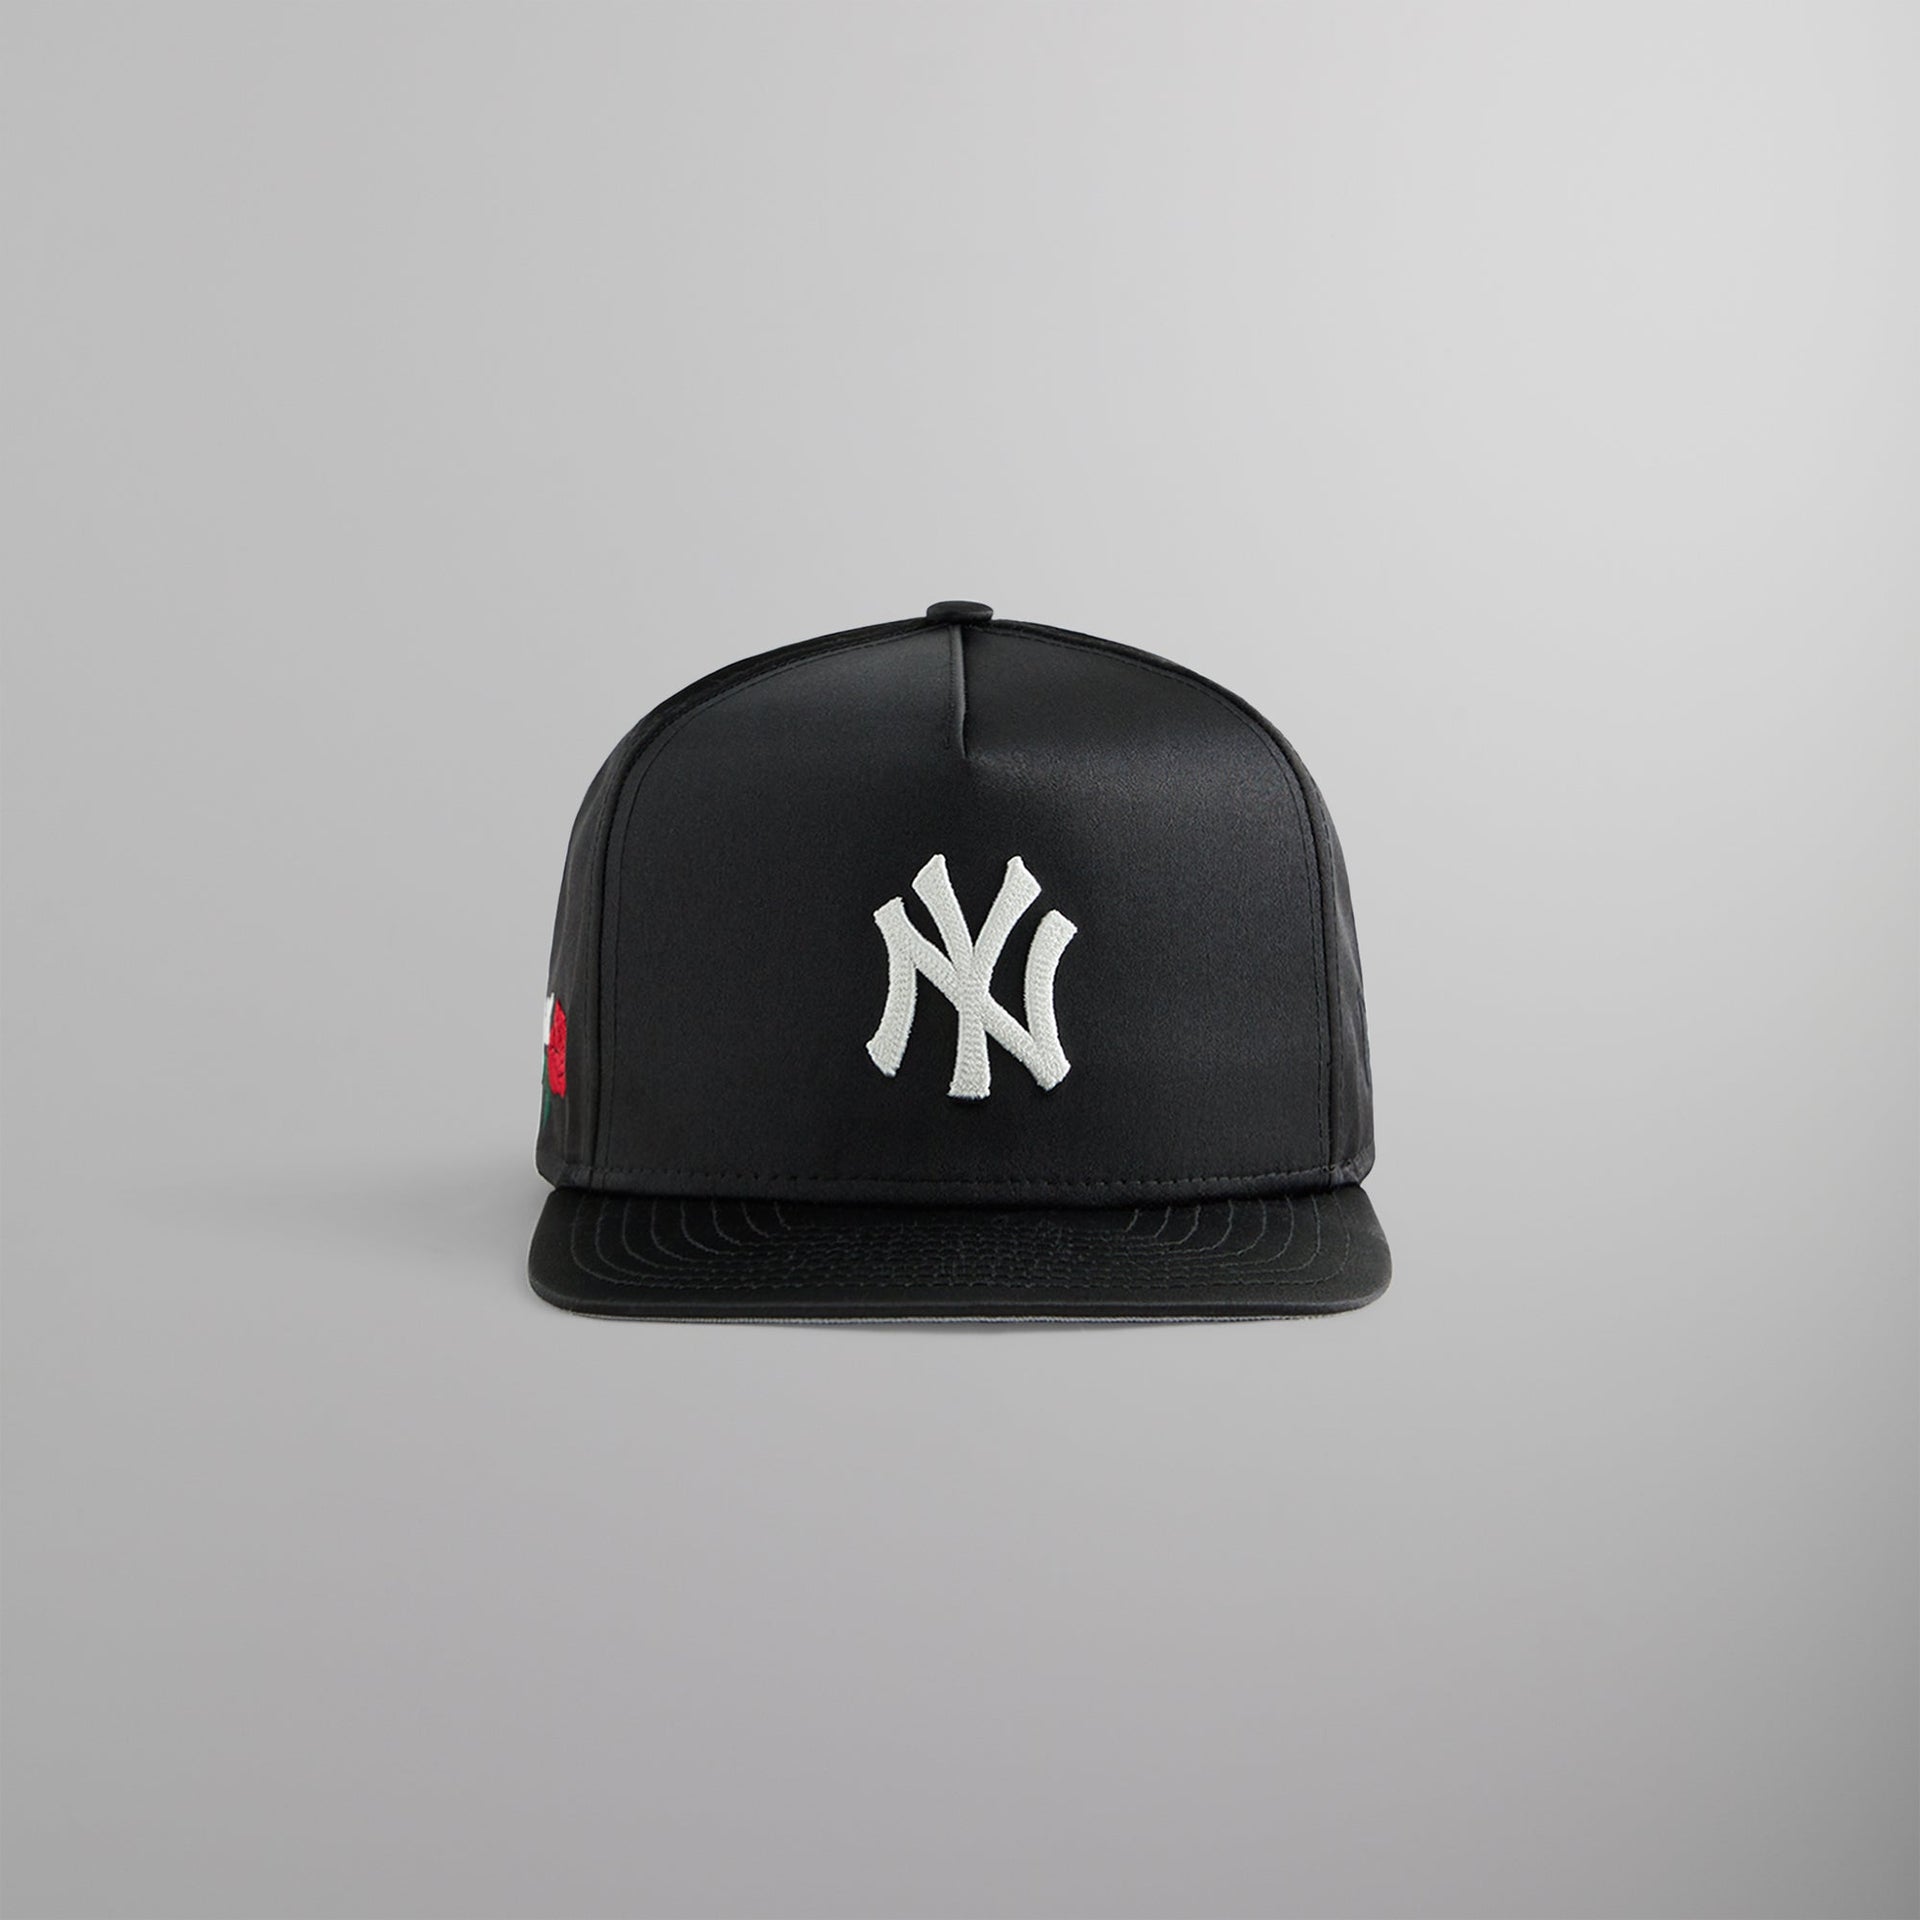 Kith & New Era for the New York Yankees Satin 9FIFTY A-Frame Snapback - Black